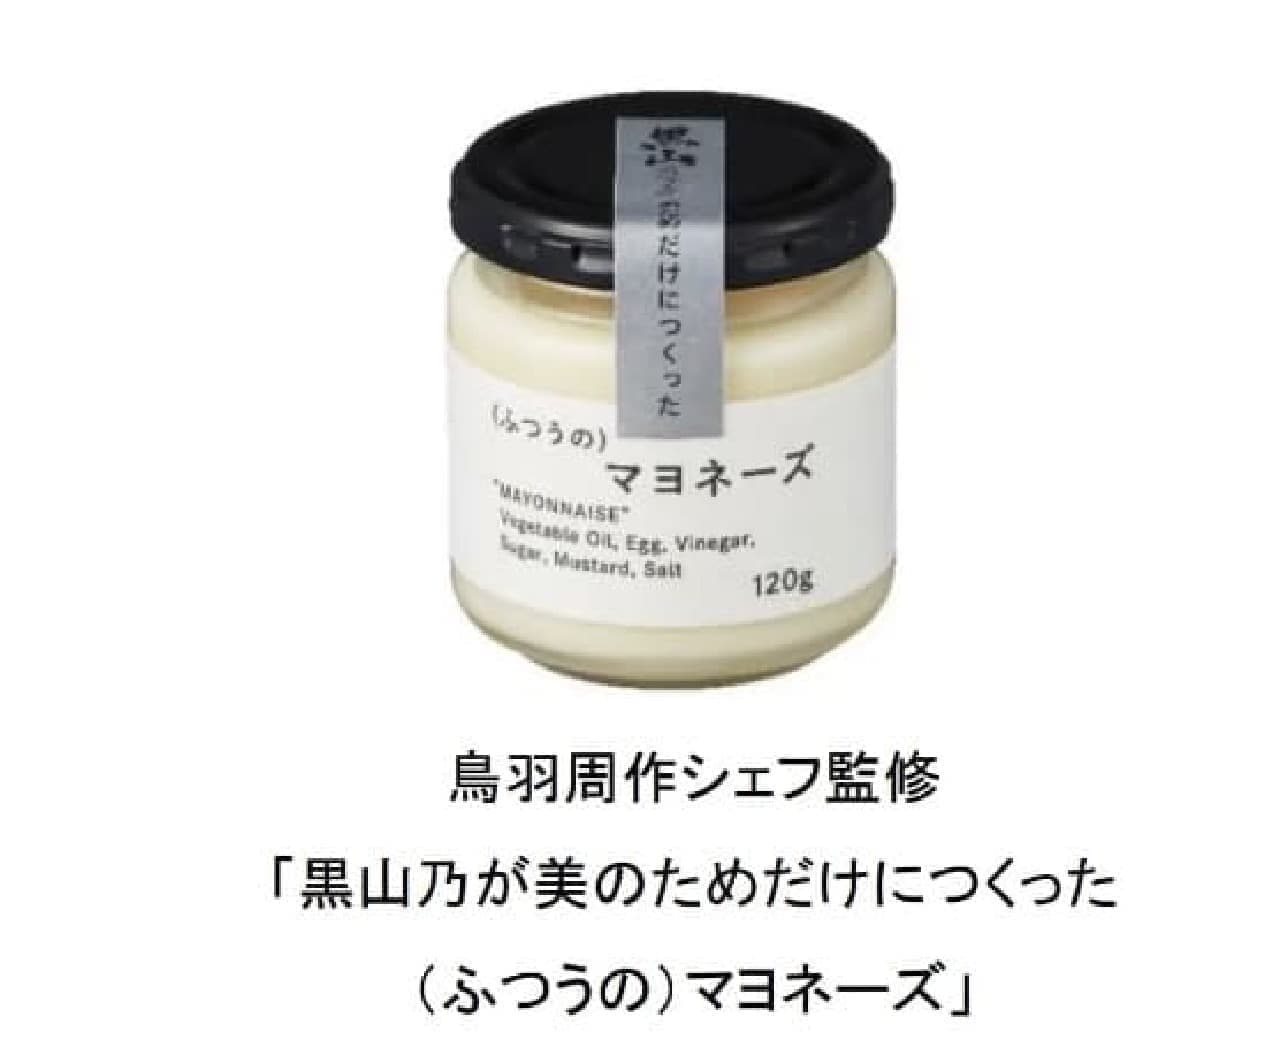 Nogami "a (normal) mayonnaise made just for Kuroyama Nogami".